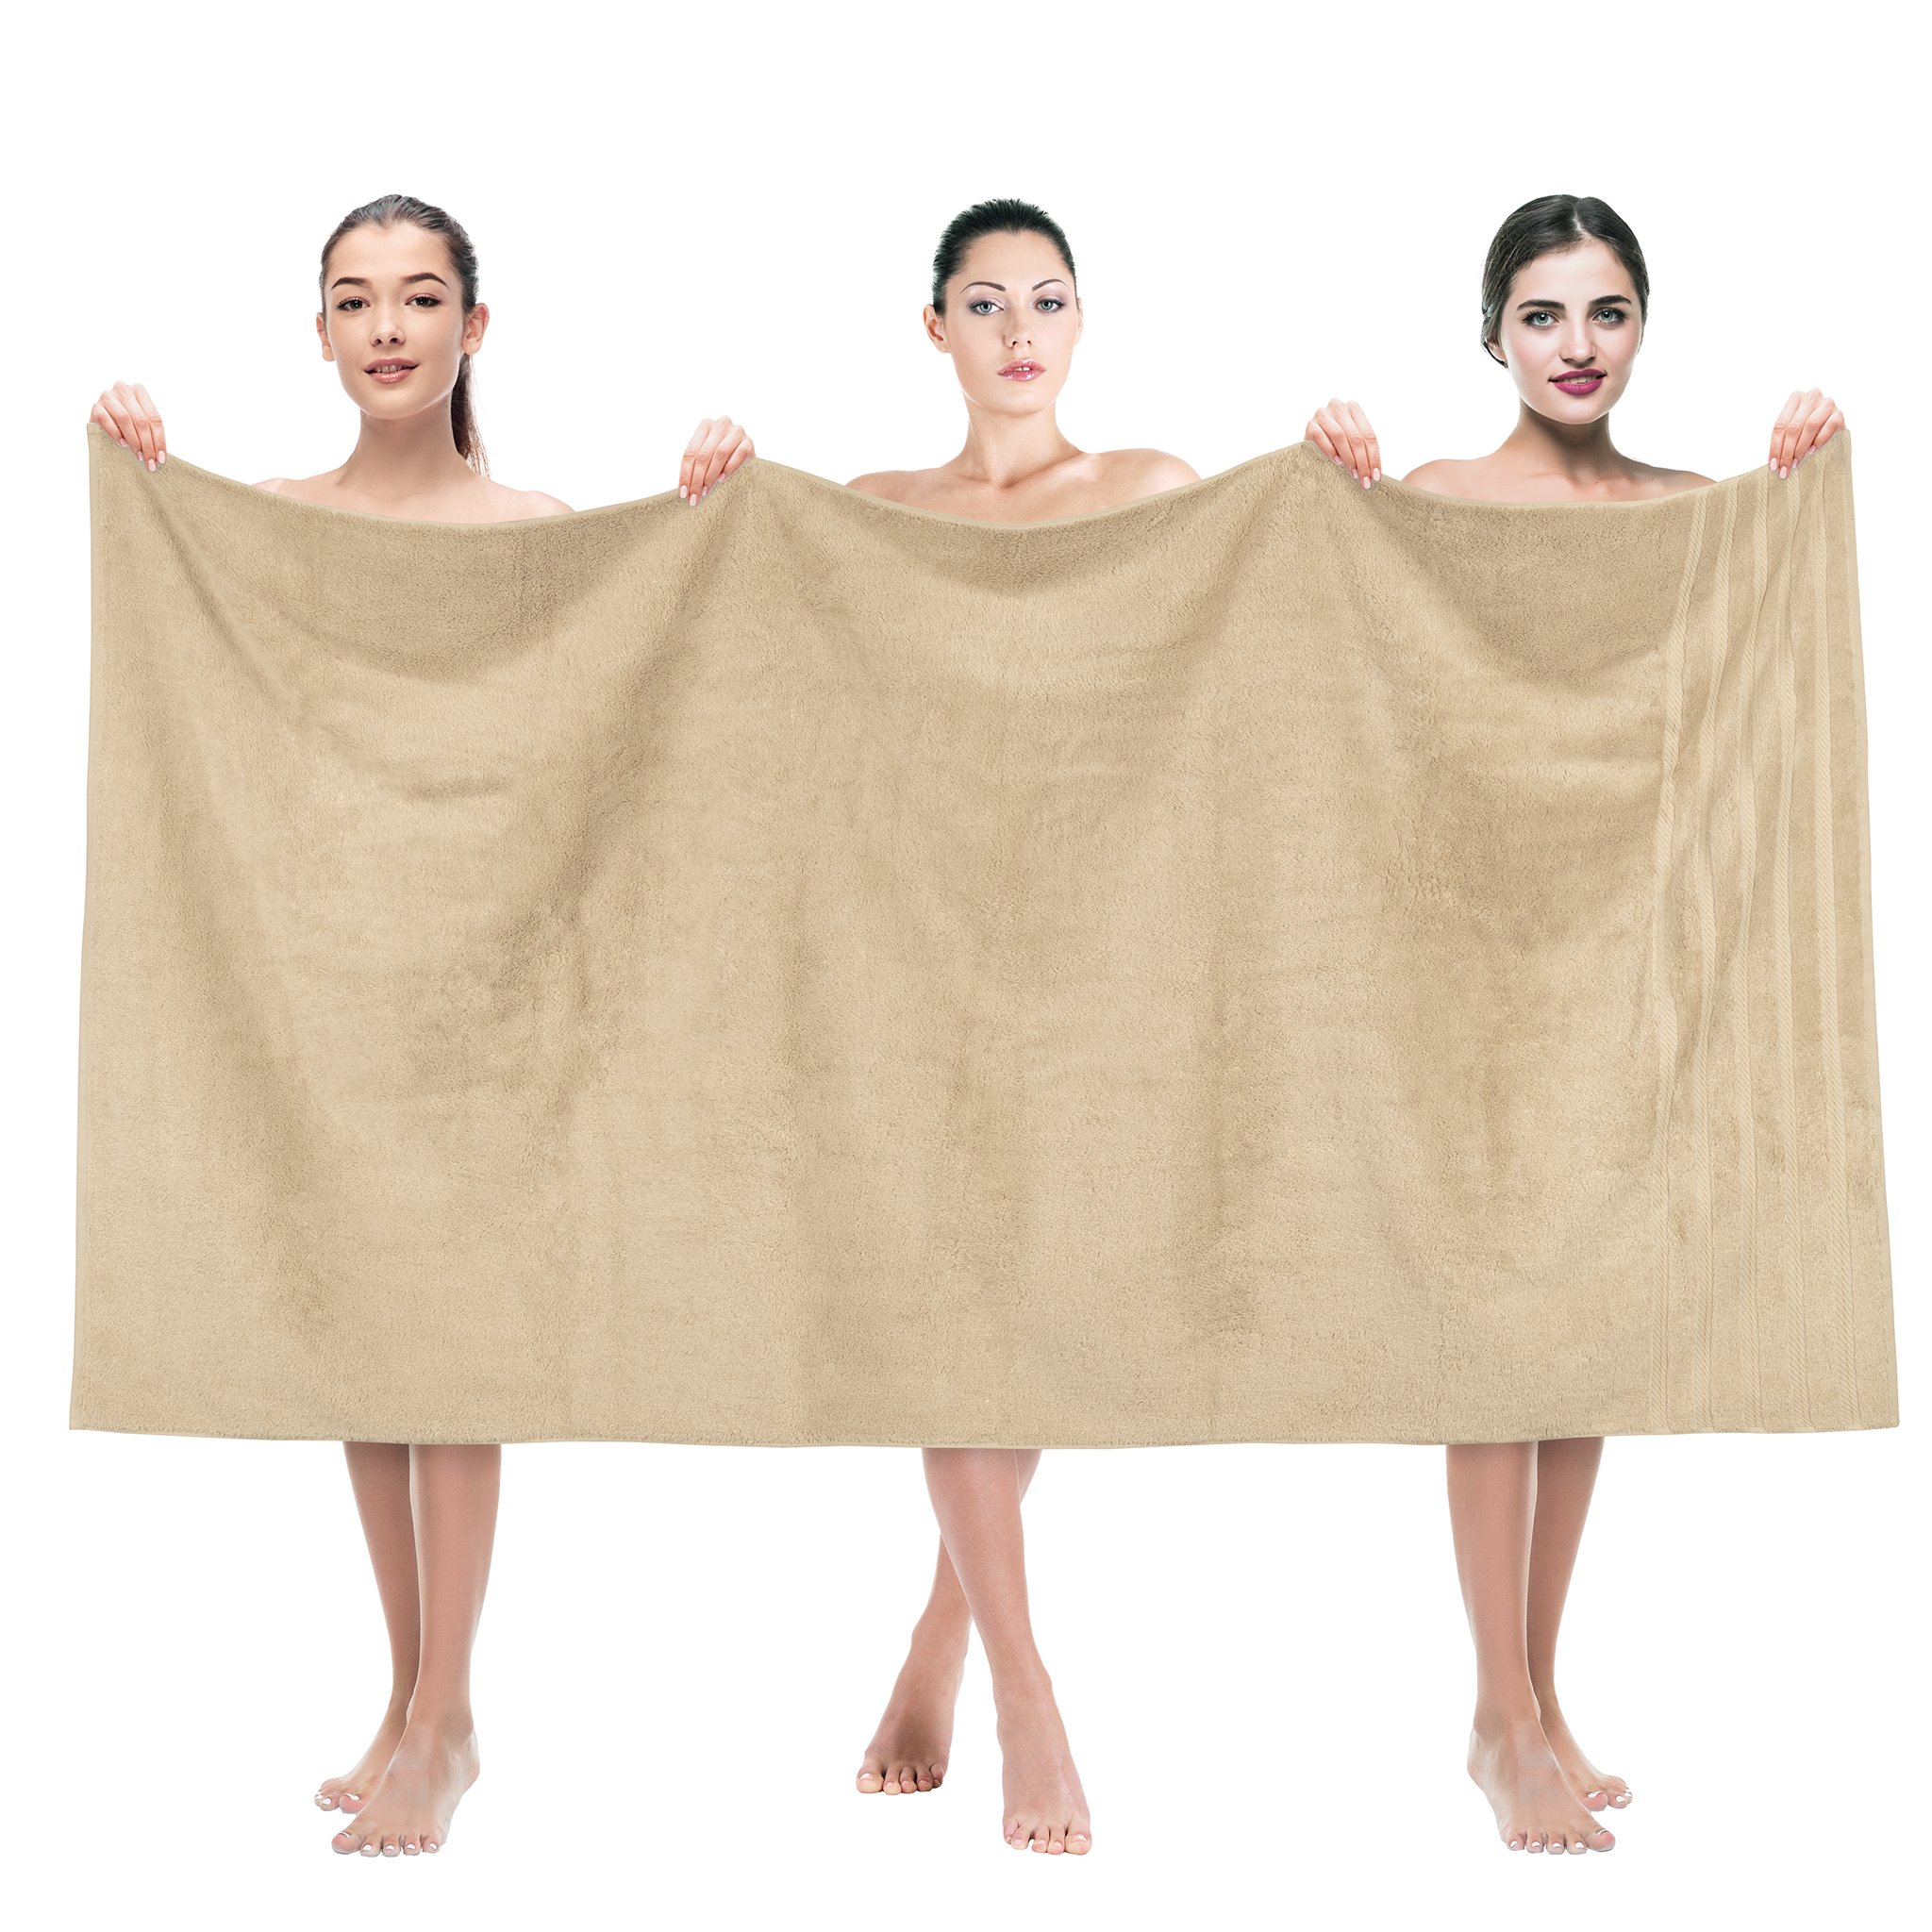 American Soft Linen - 35x70 Jumbo Bath Sheet Turkish Bath Towel - 16 Piece Case Pack - Sand-Taupe - 1